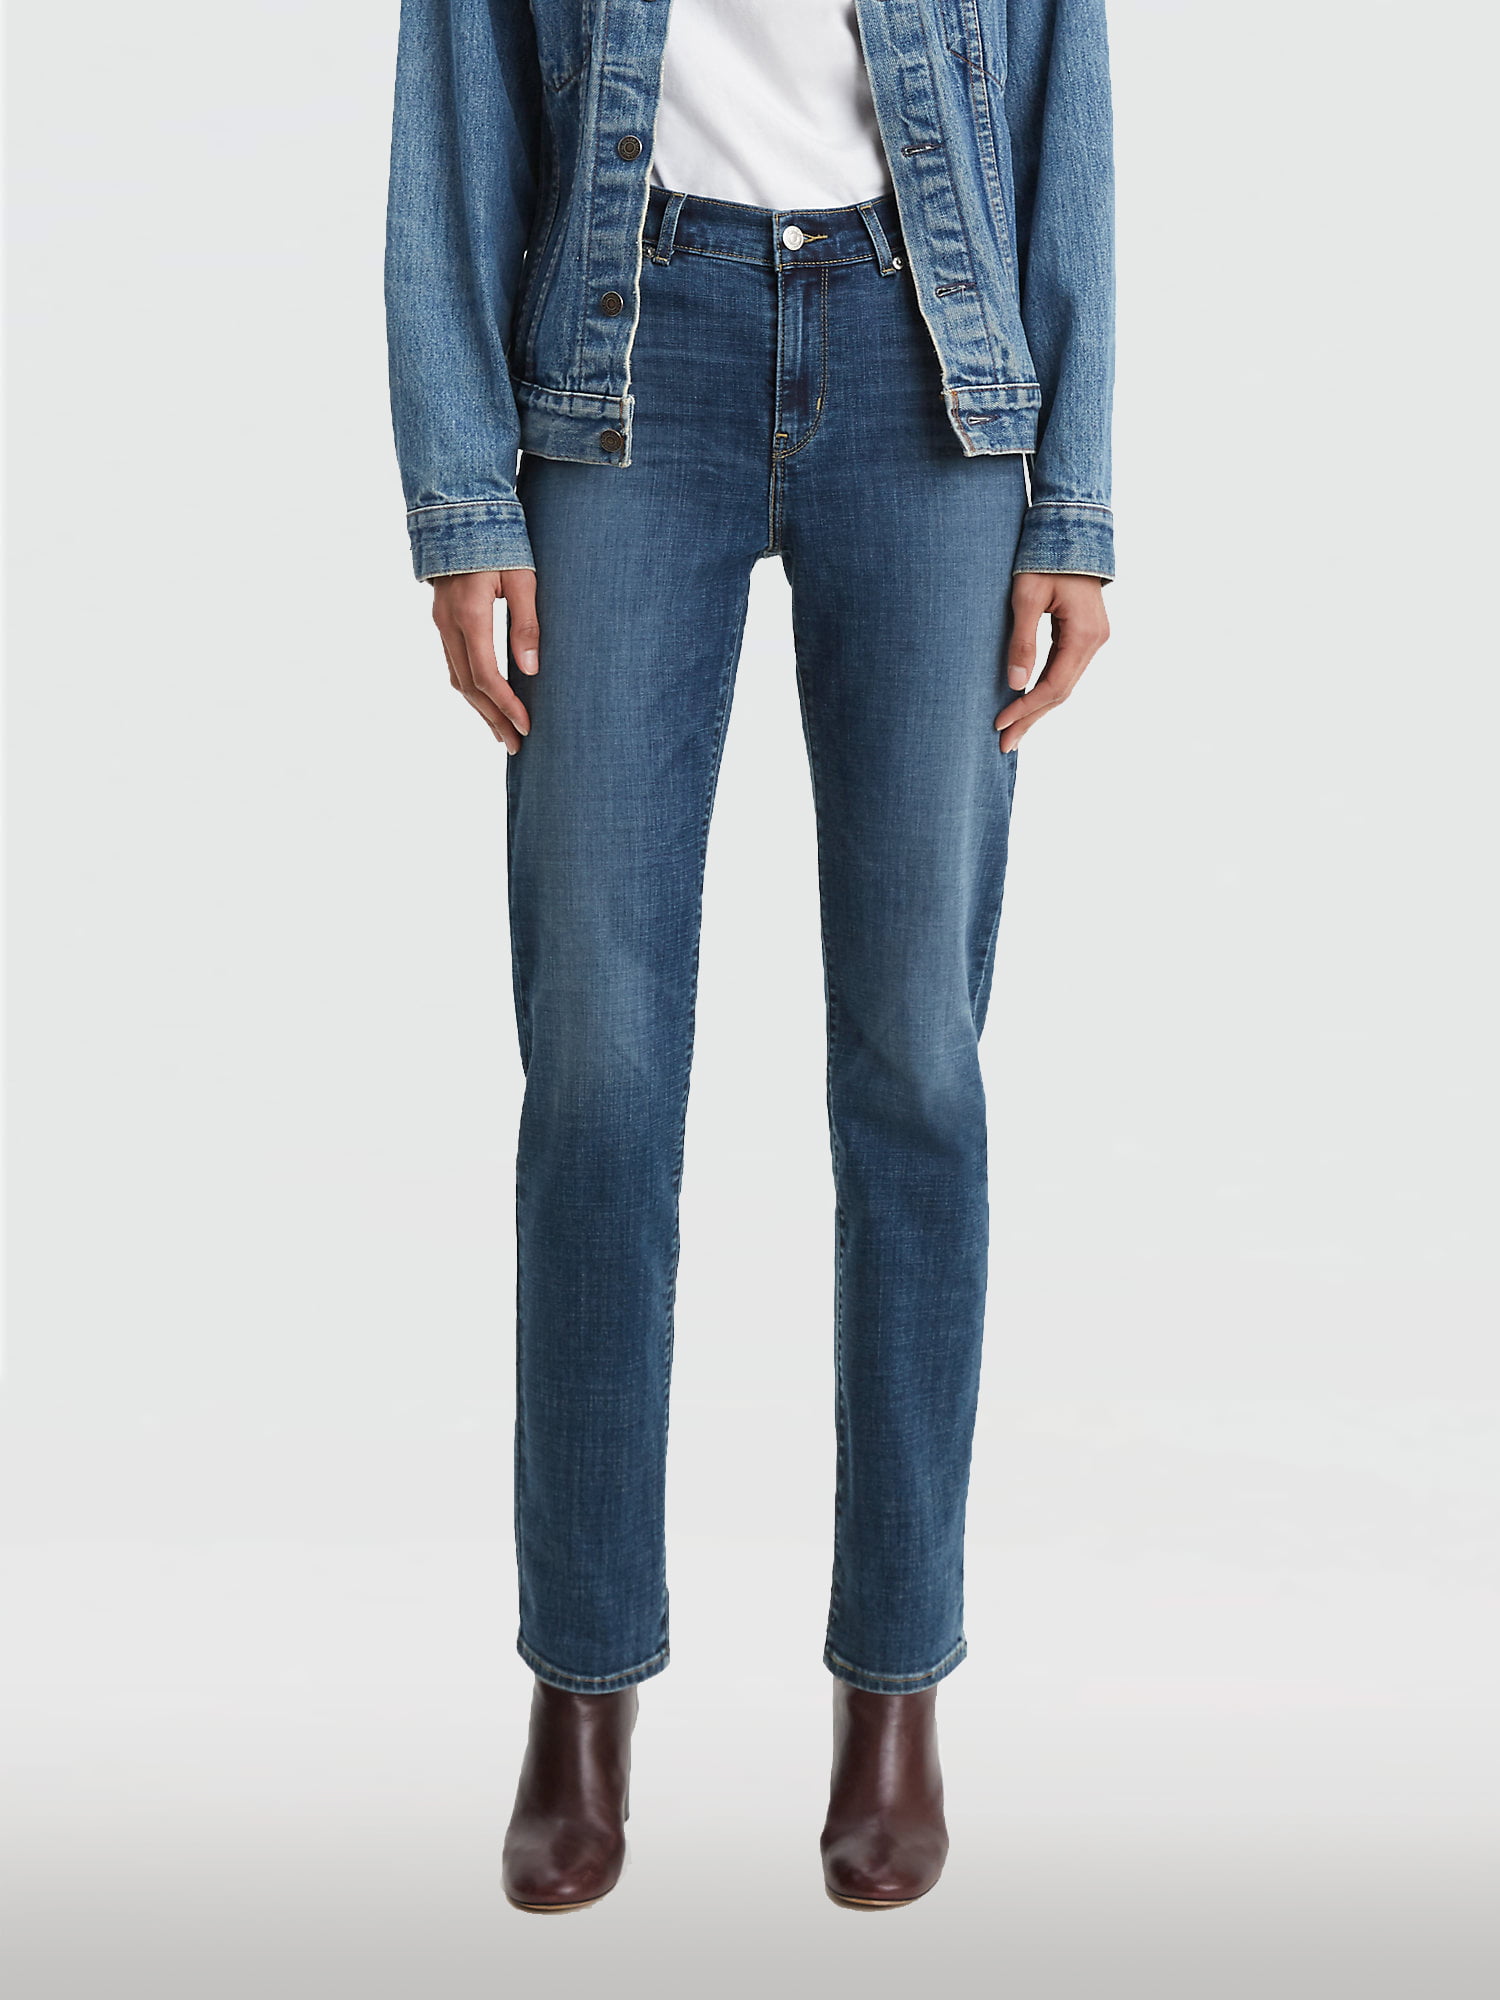 med uret Leia frekvens Levi's Original Red Tab Women's Classic Straight Fit Jeans - Walmart.com